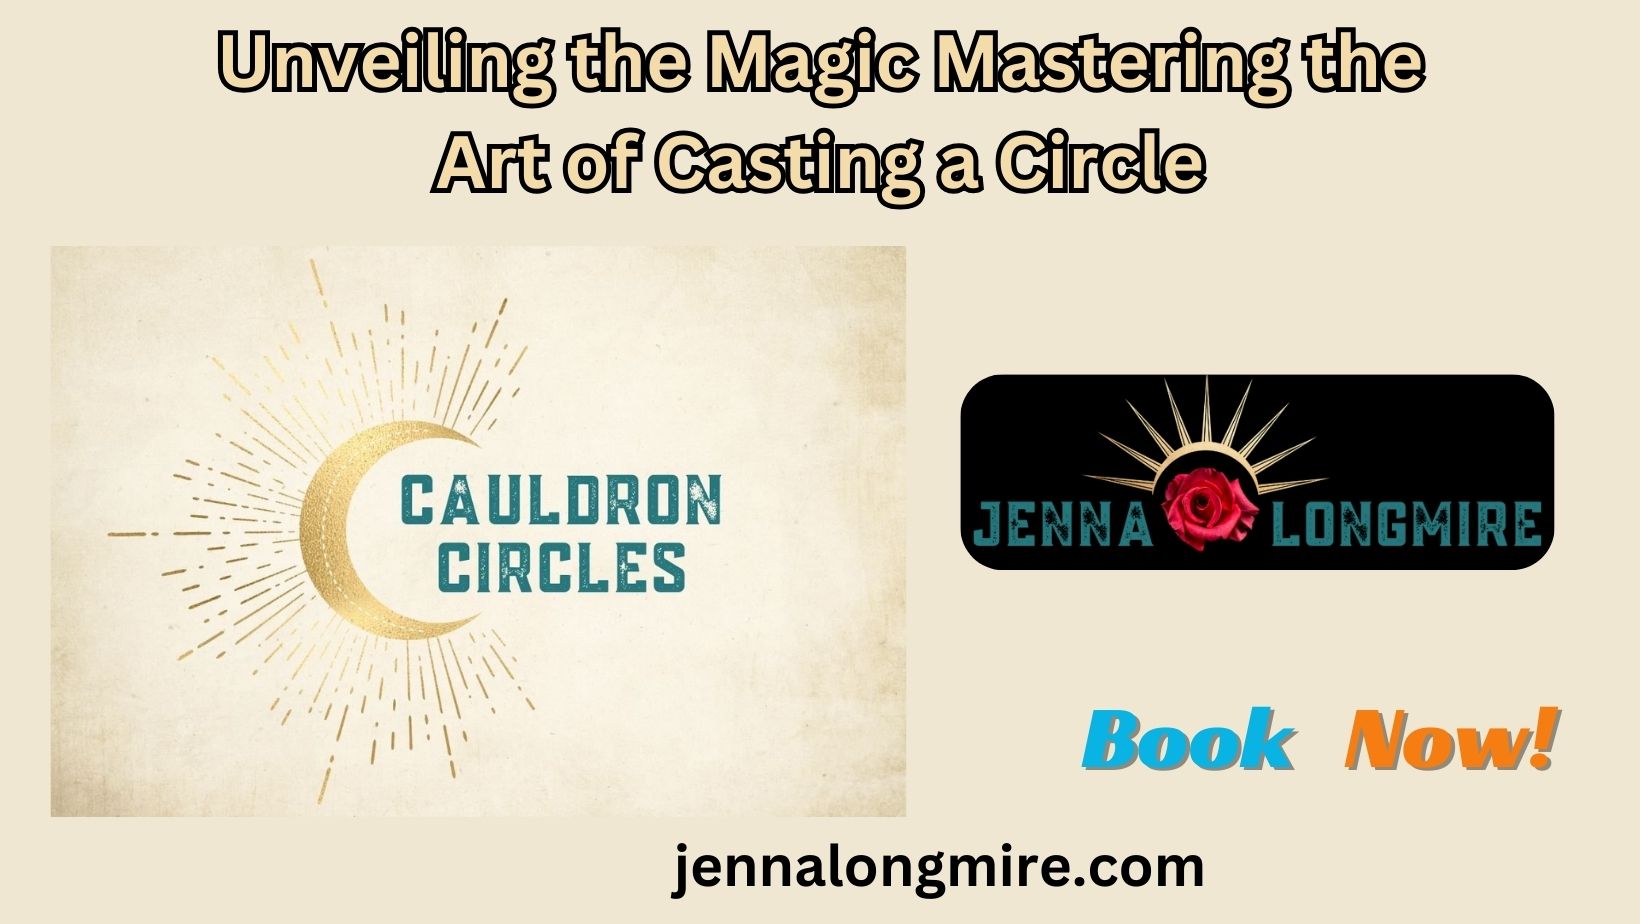 Casting a circle